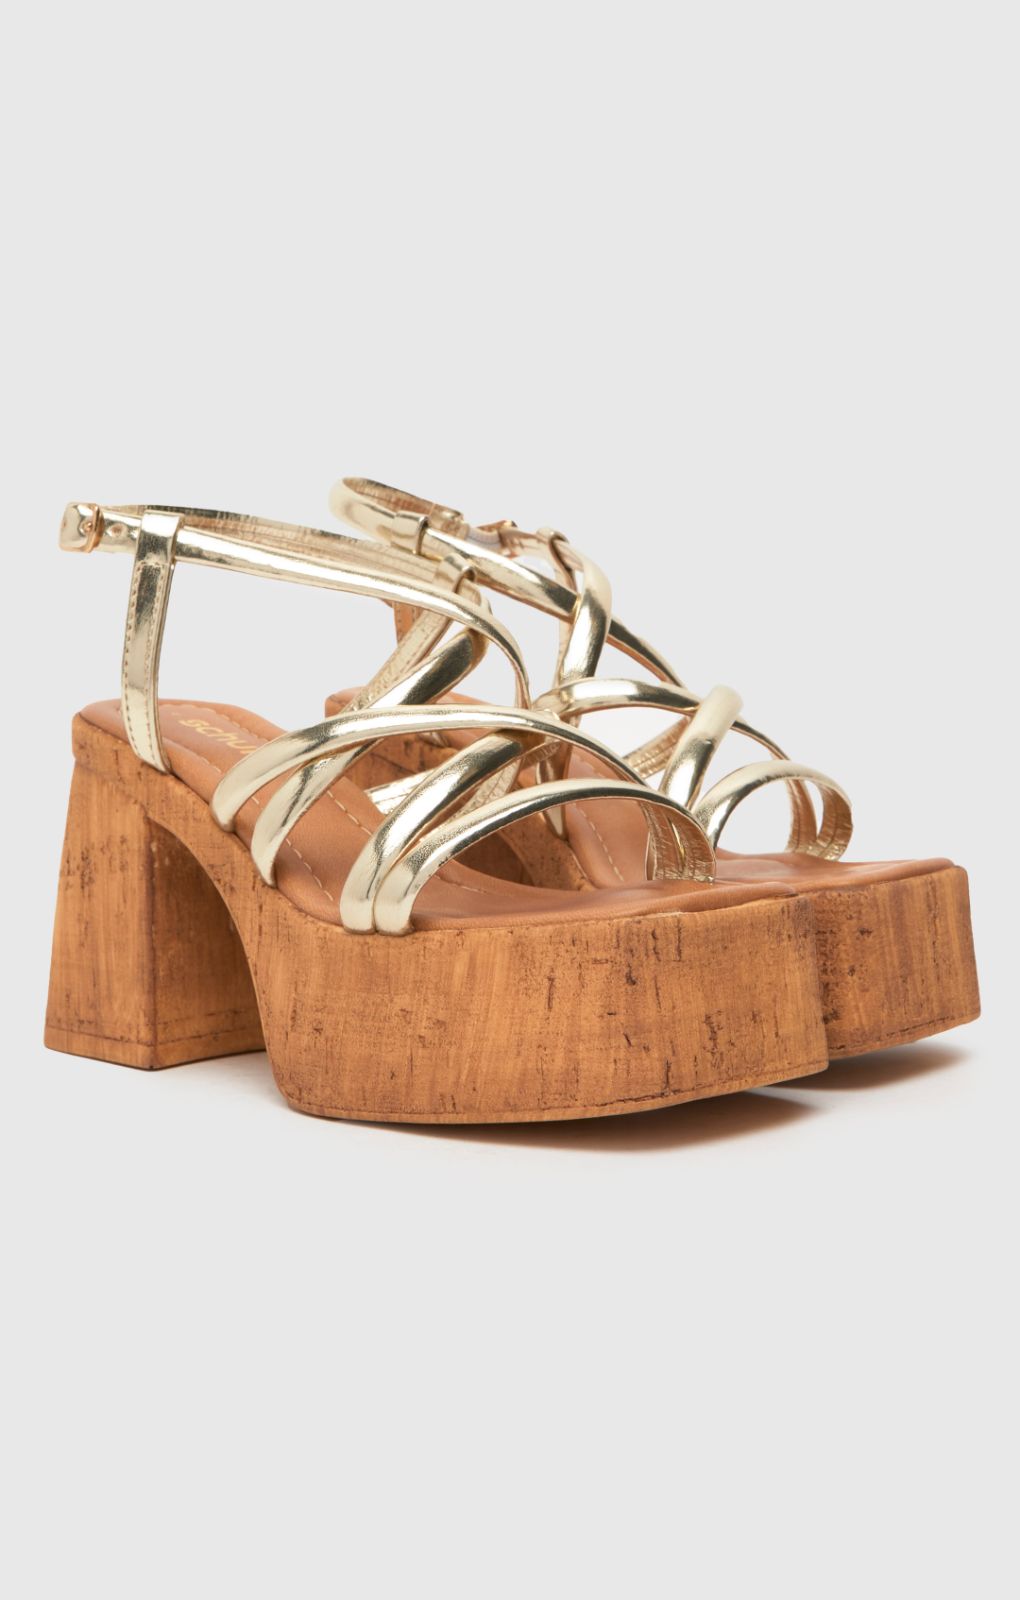 Schuh Vivian Strappy Cork Platform Sandals in Gold product image